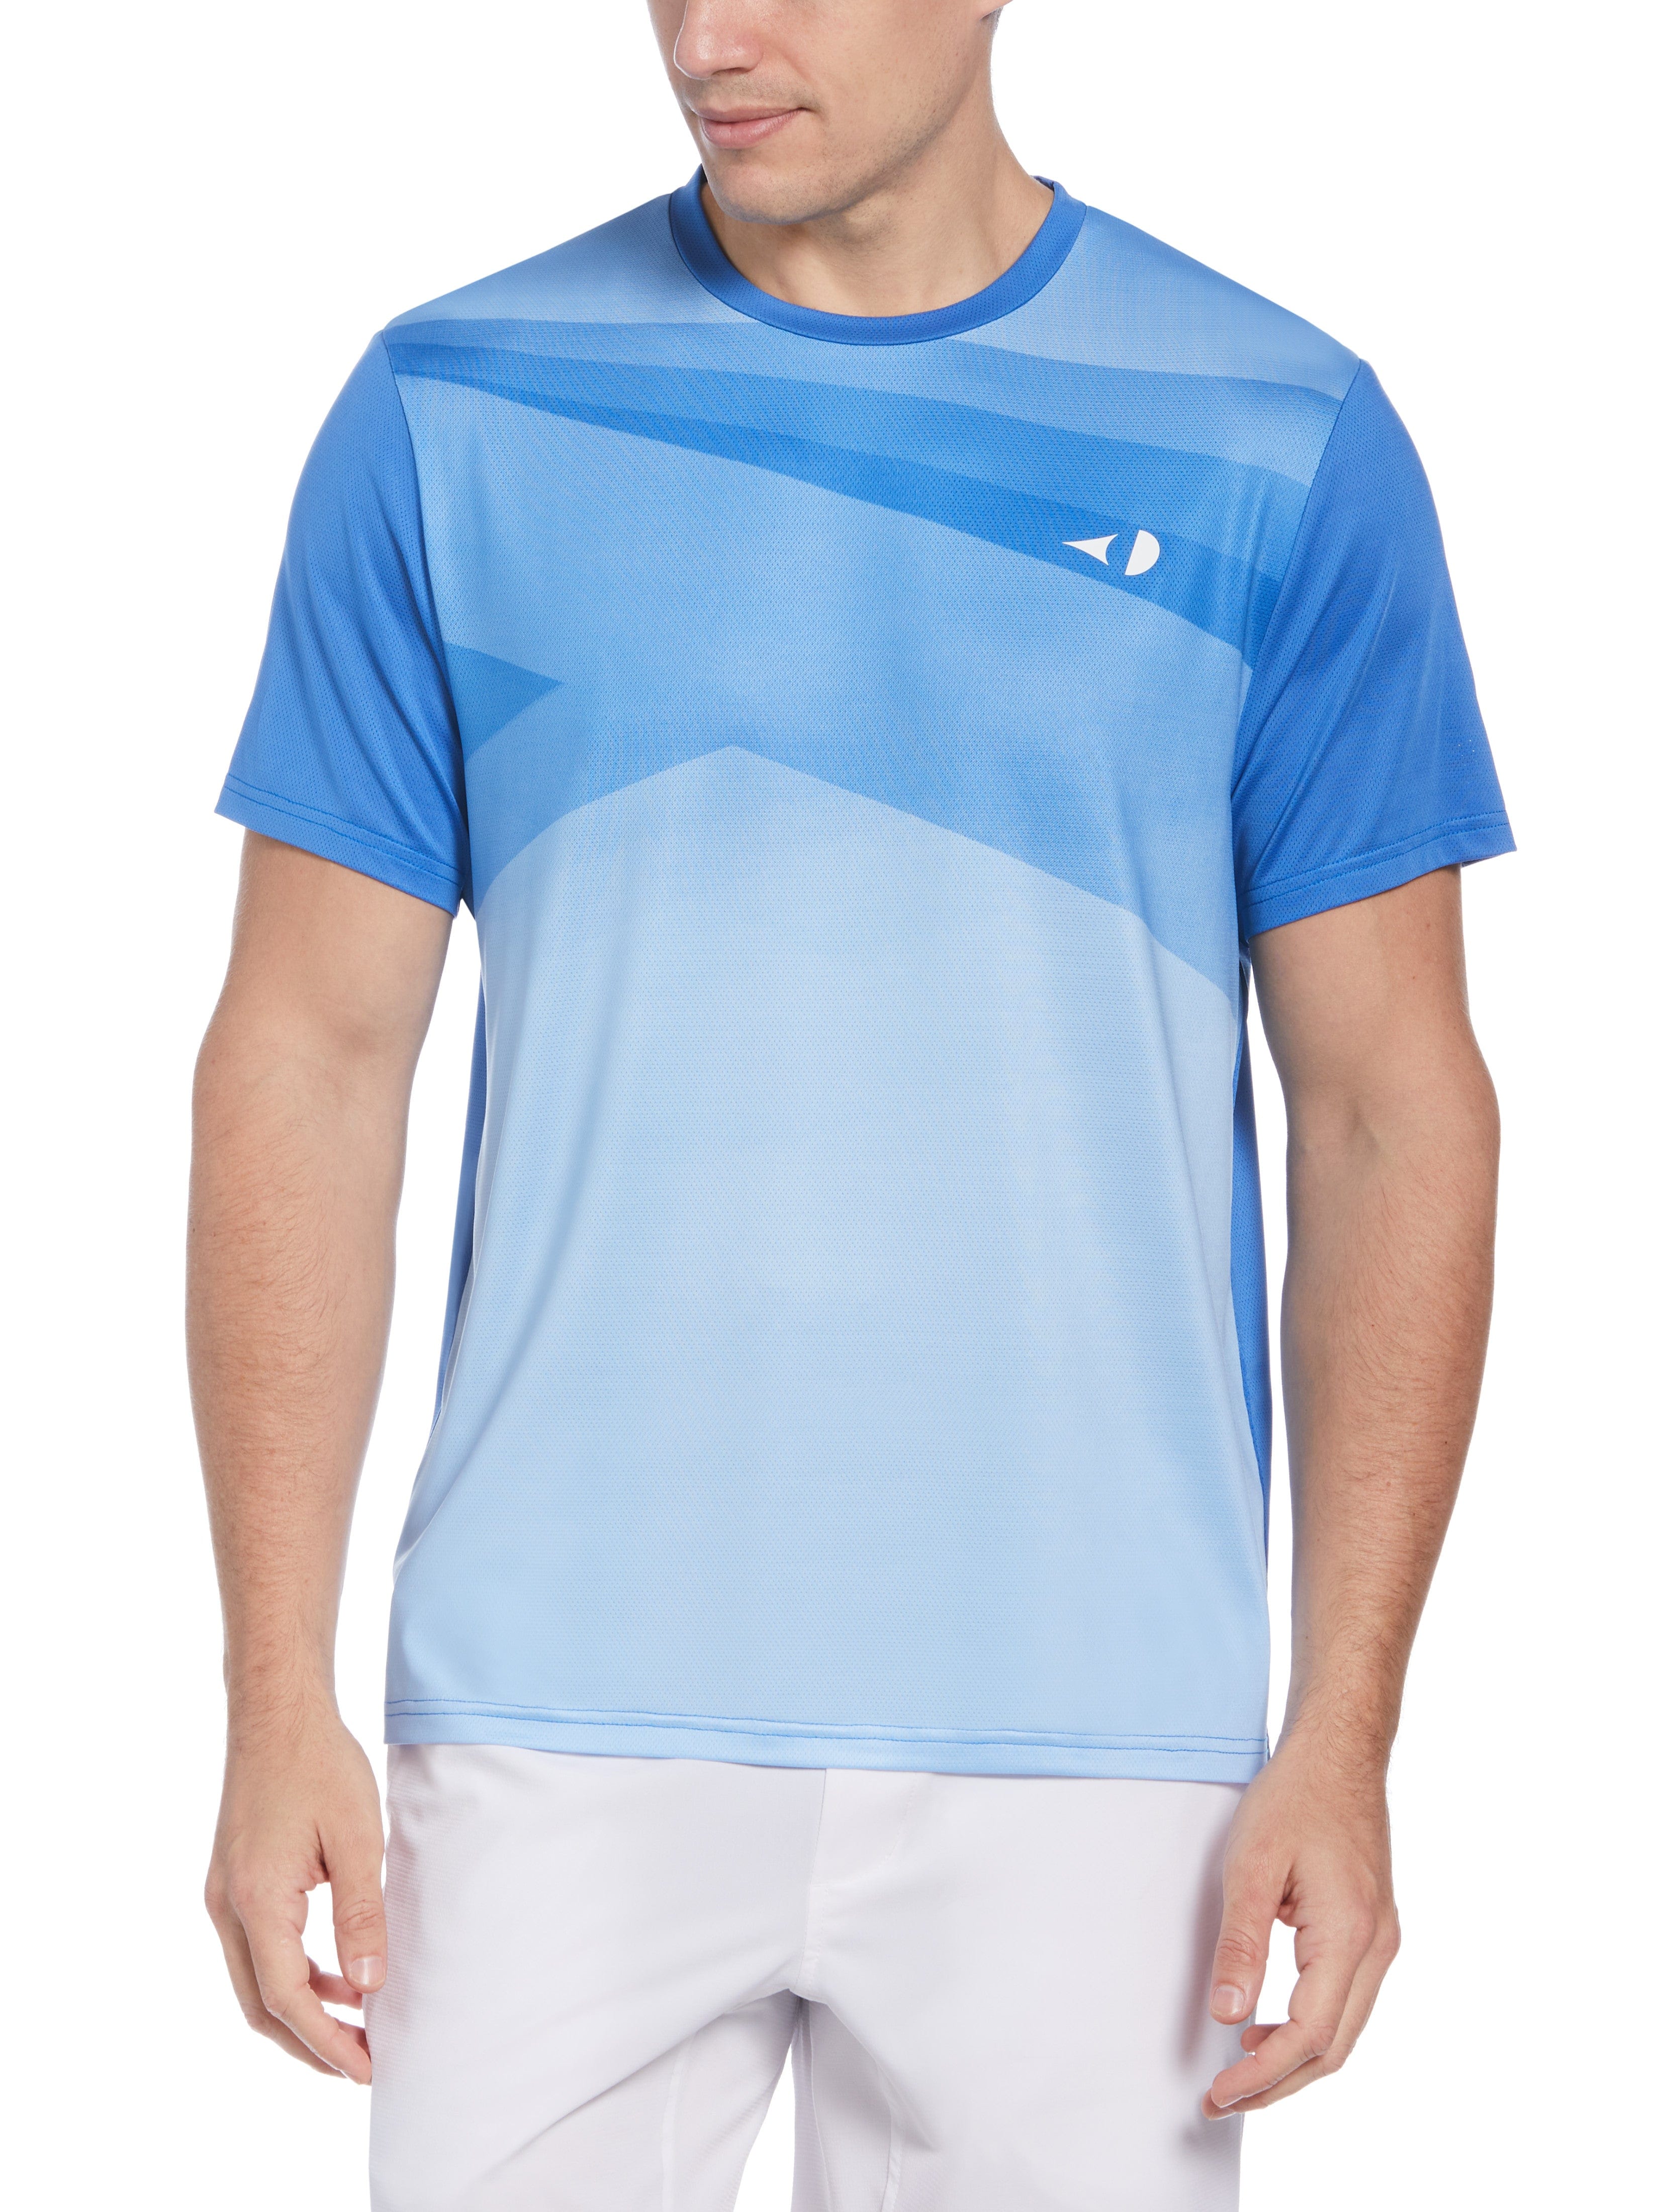 Grand Slam Mens Asymetrical Texture Printed Tennis T-Shirt, Size Medium, Egyptian Blue, Polyester/Spandex | Golf Apparel Shop